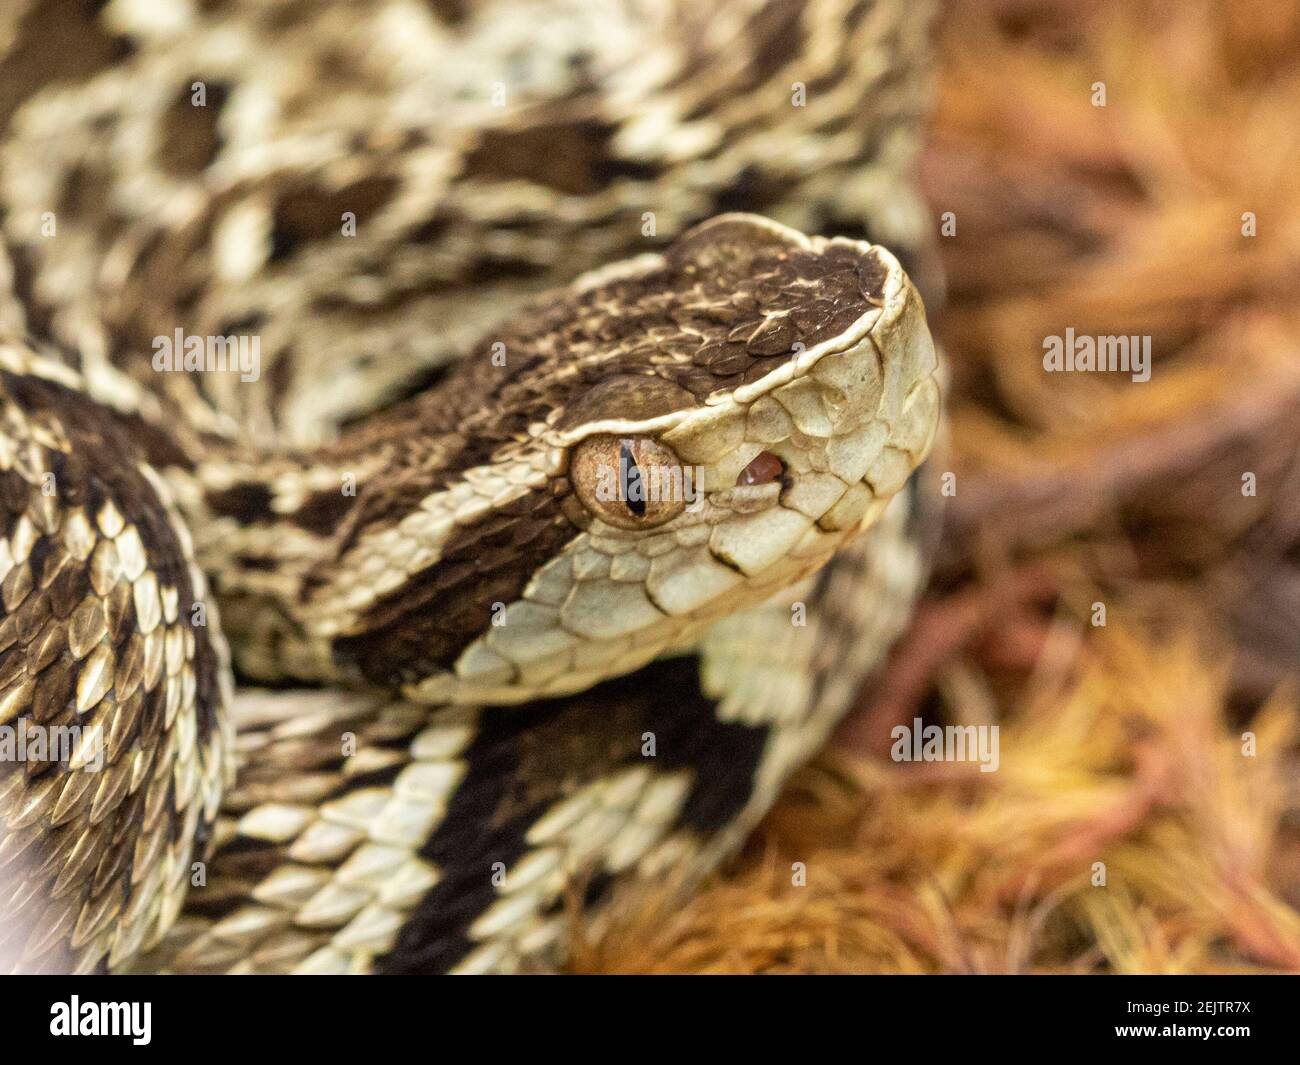 Jararaca Snake (Bothrops Jararaca) . Poisonous brazilian snake Stock Photo